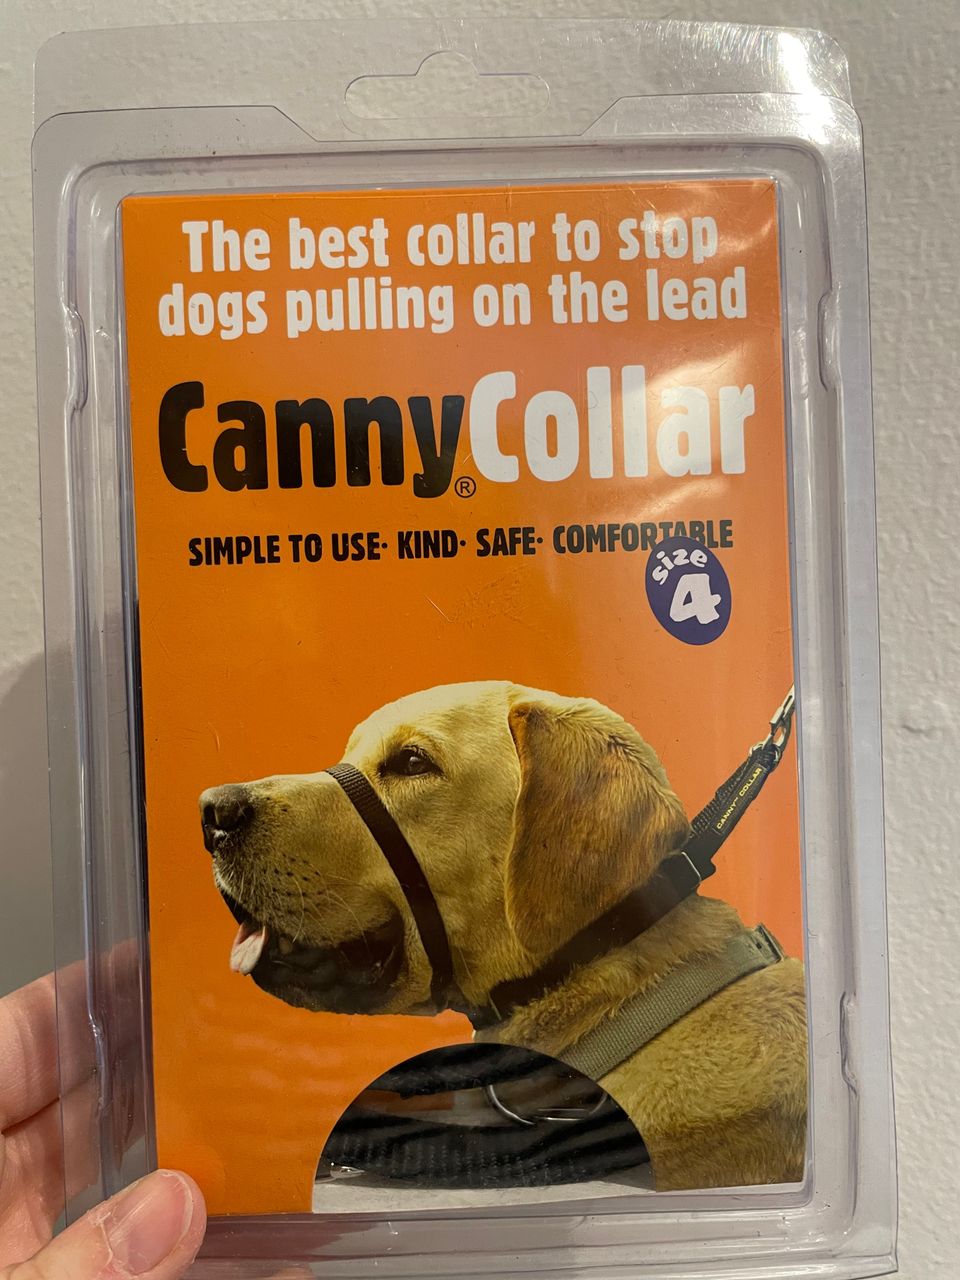 Canny collar